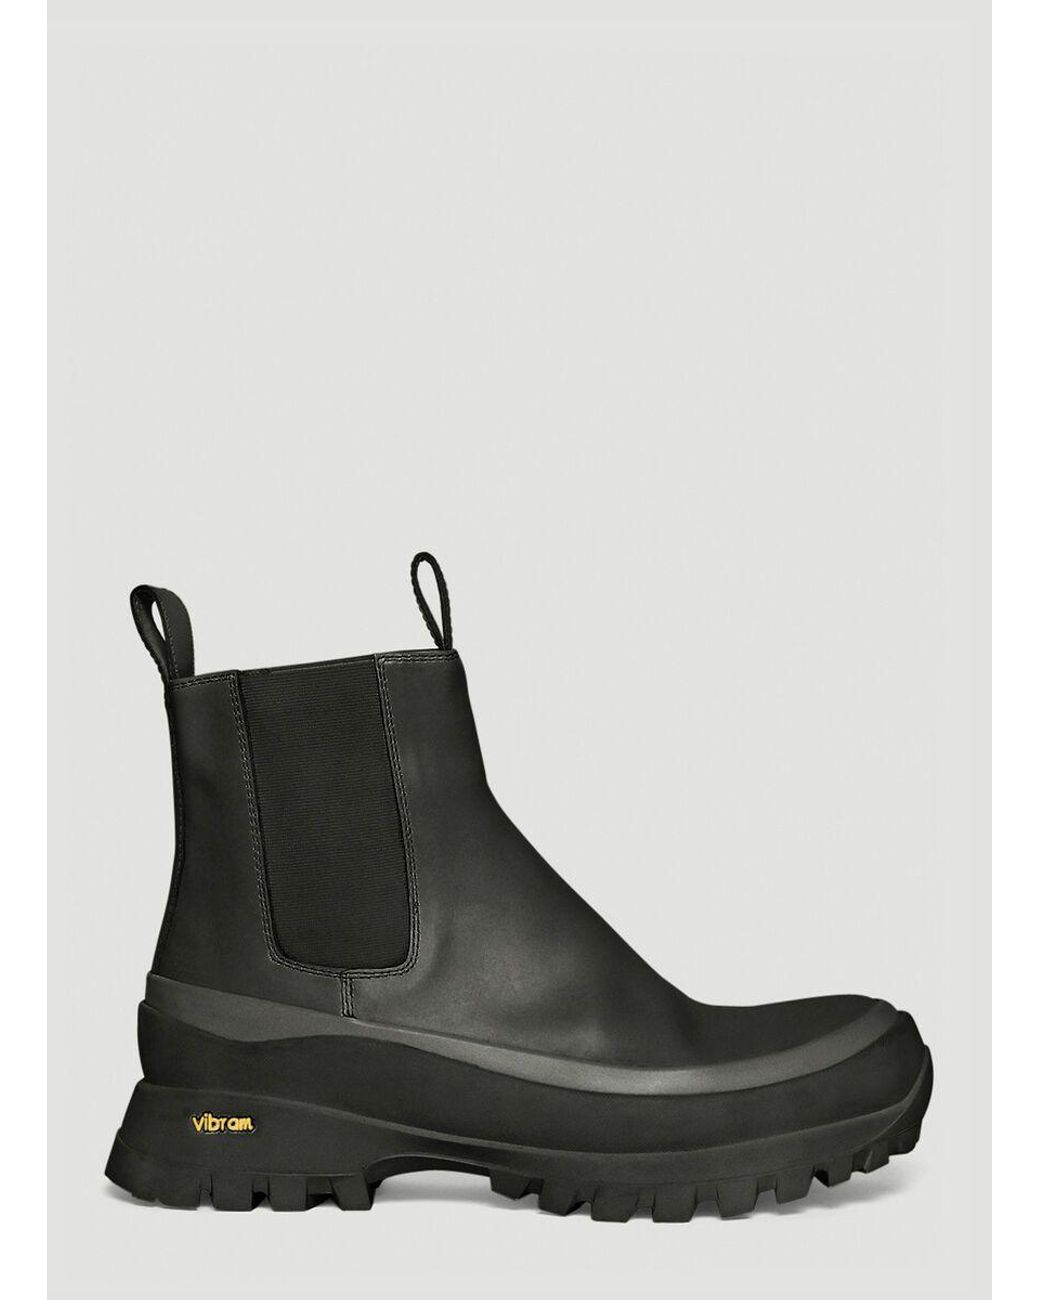 Jil Sander Leather Vibram Sole Chelsea Boots in Black - Lyst